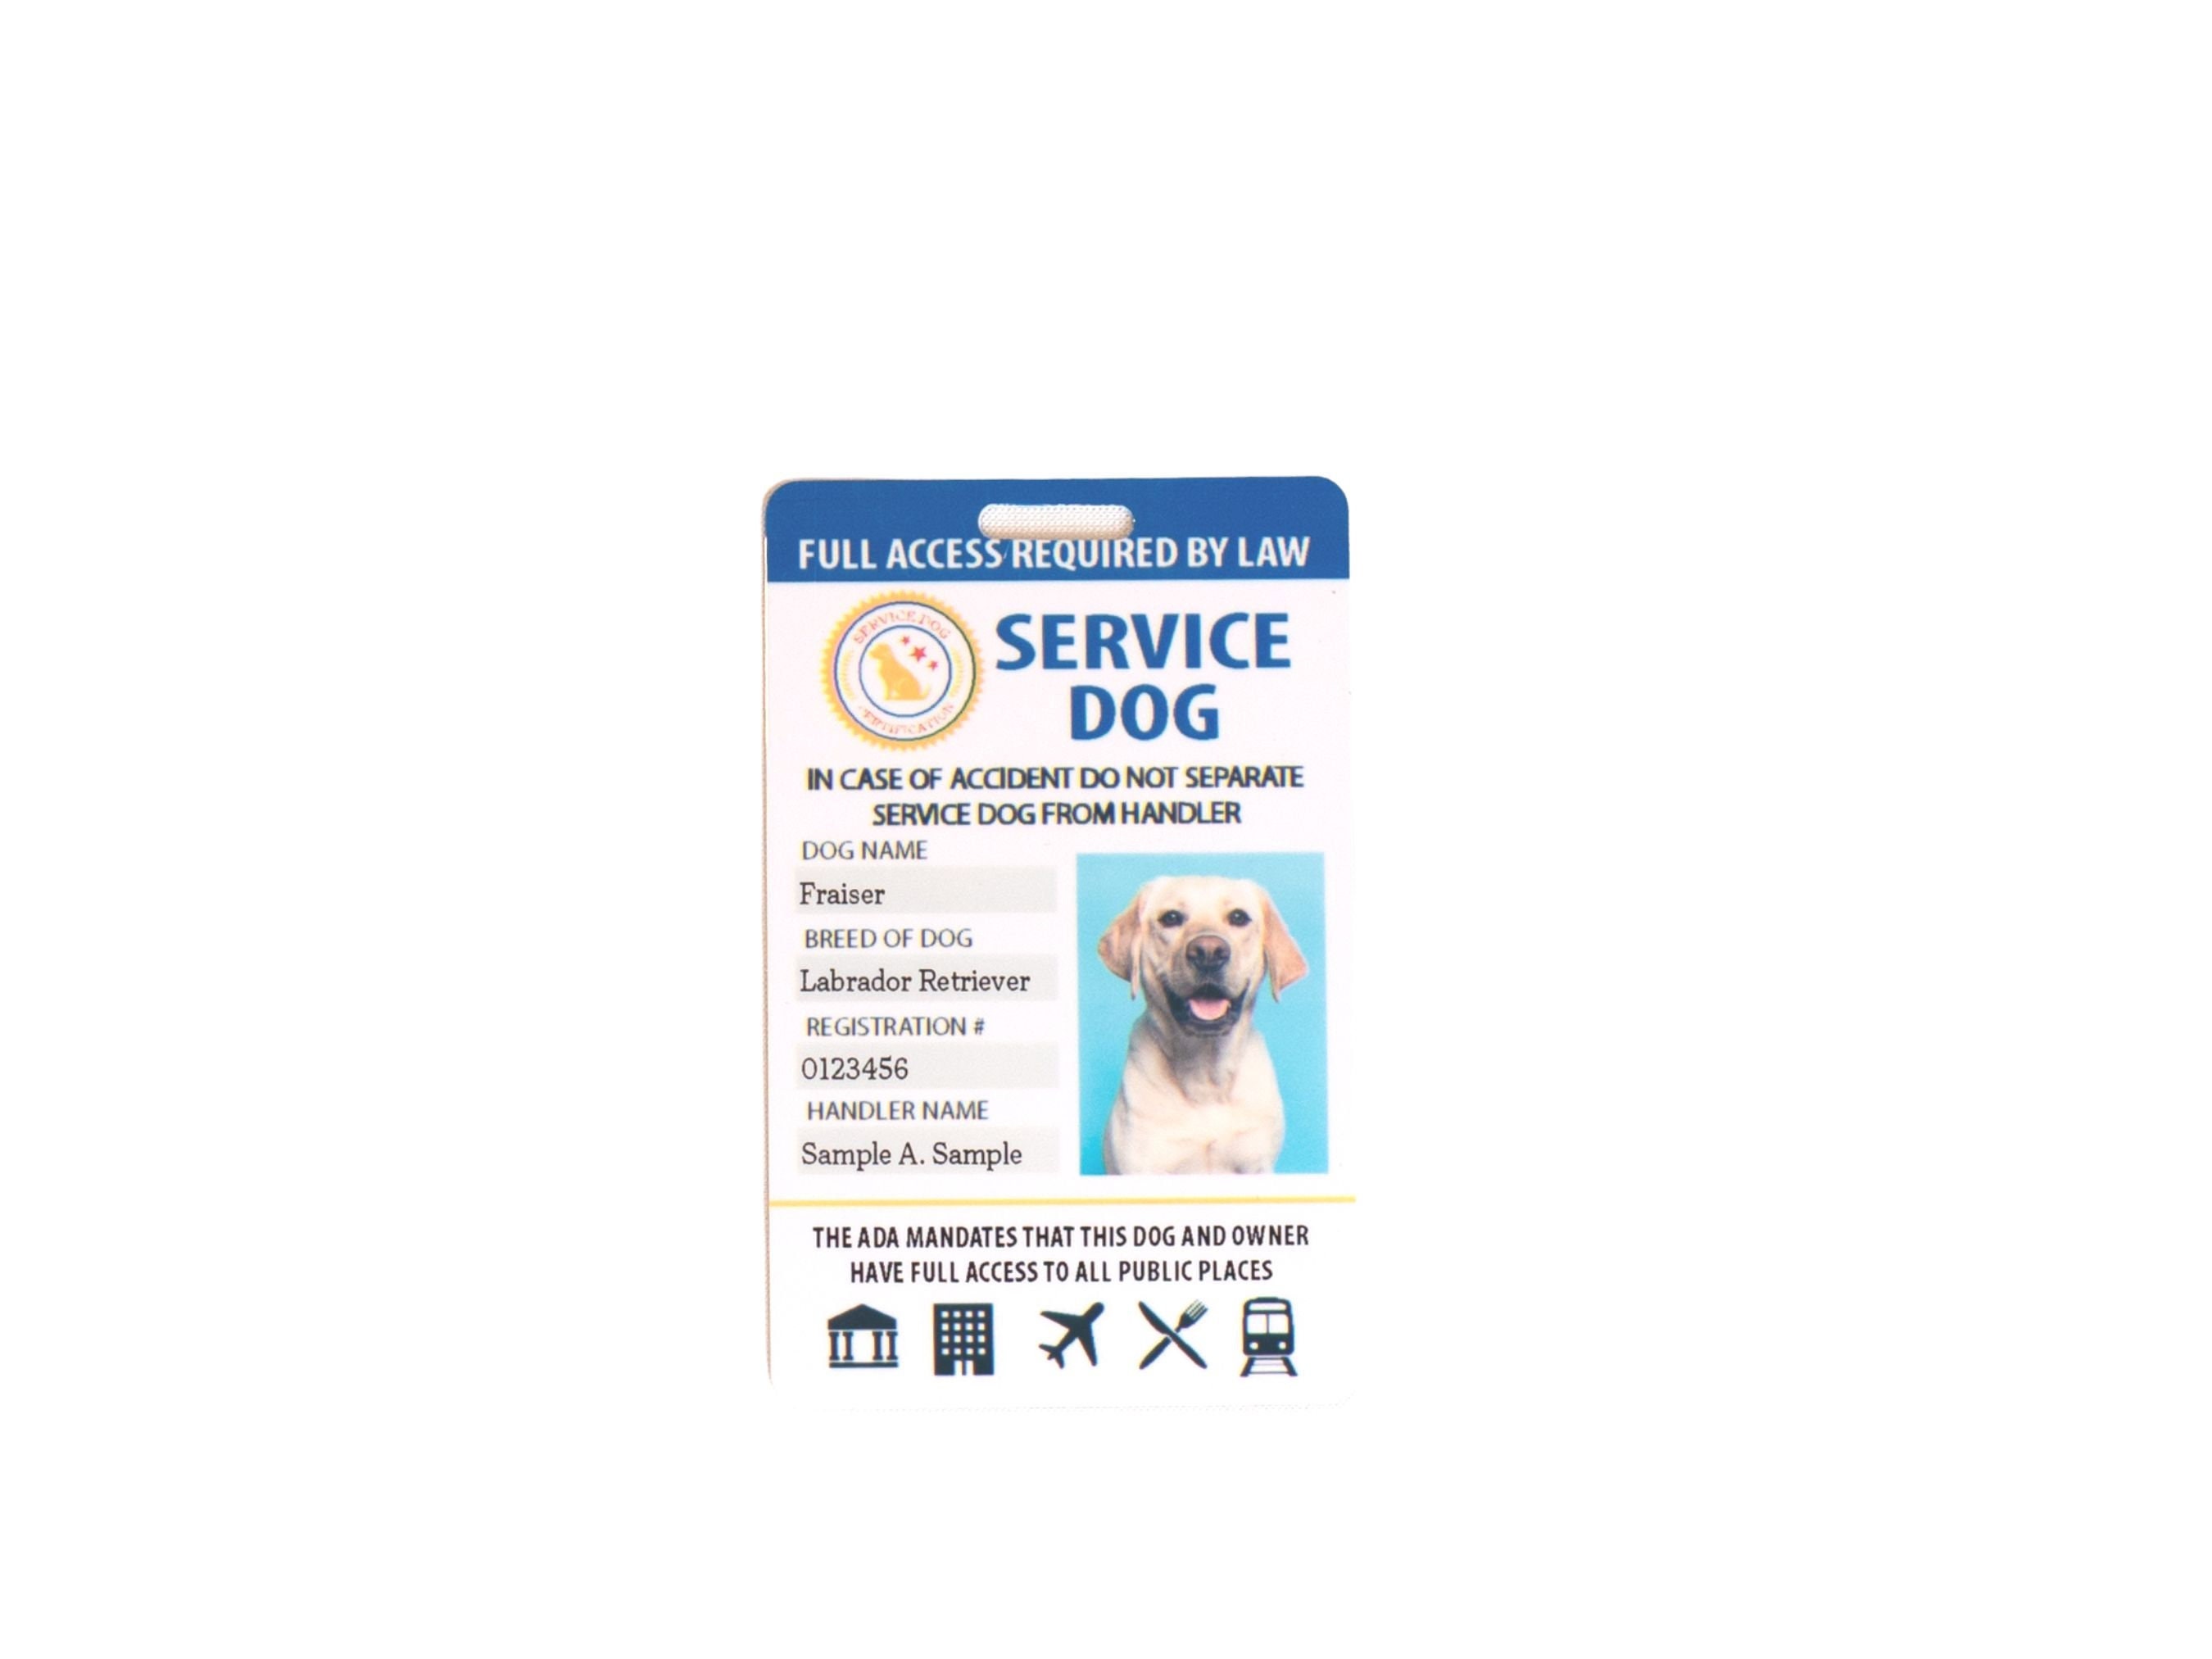 Service Dog Emergency Card Service Dog Medical Card Service Dog Card Jewellery Bracelets ID & Medical Bracelets Service Dog Alert Card 